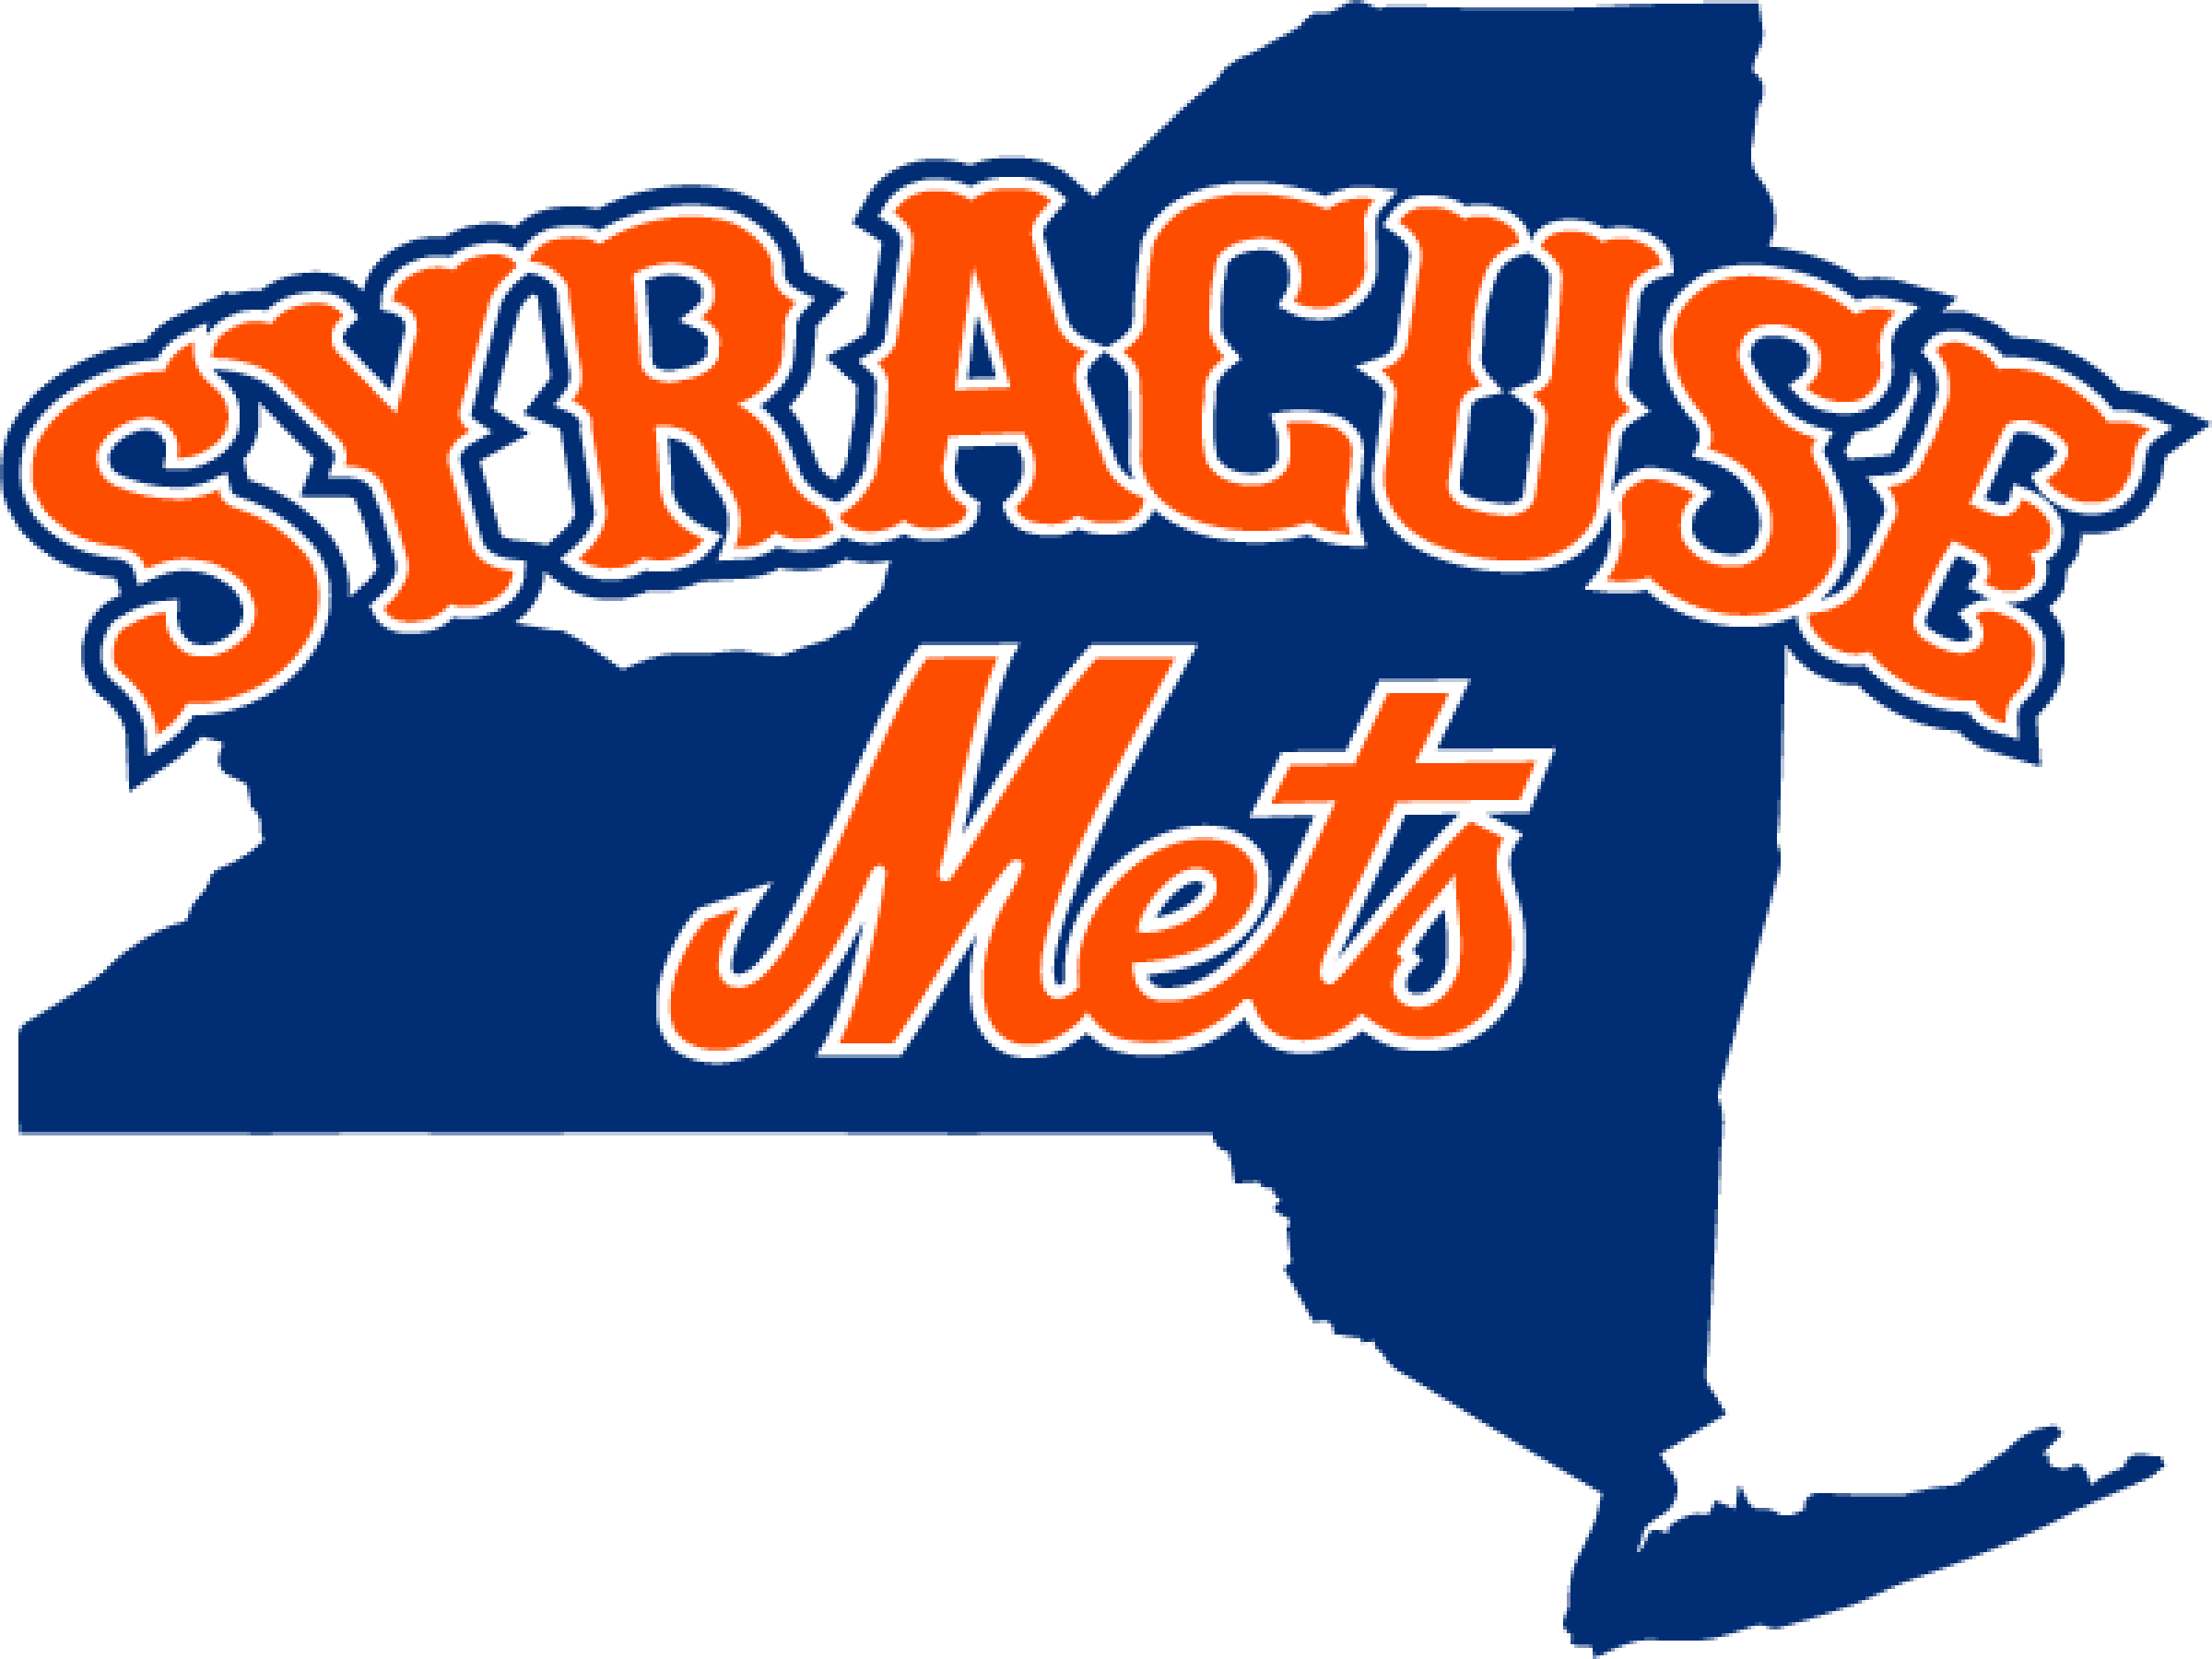 Syracuse Mets